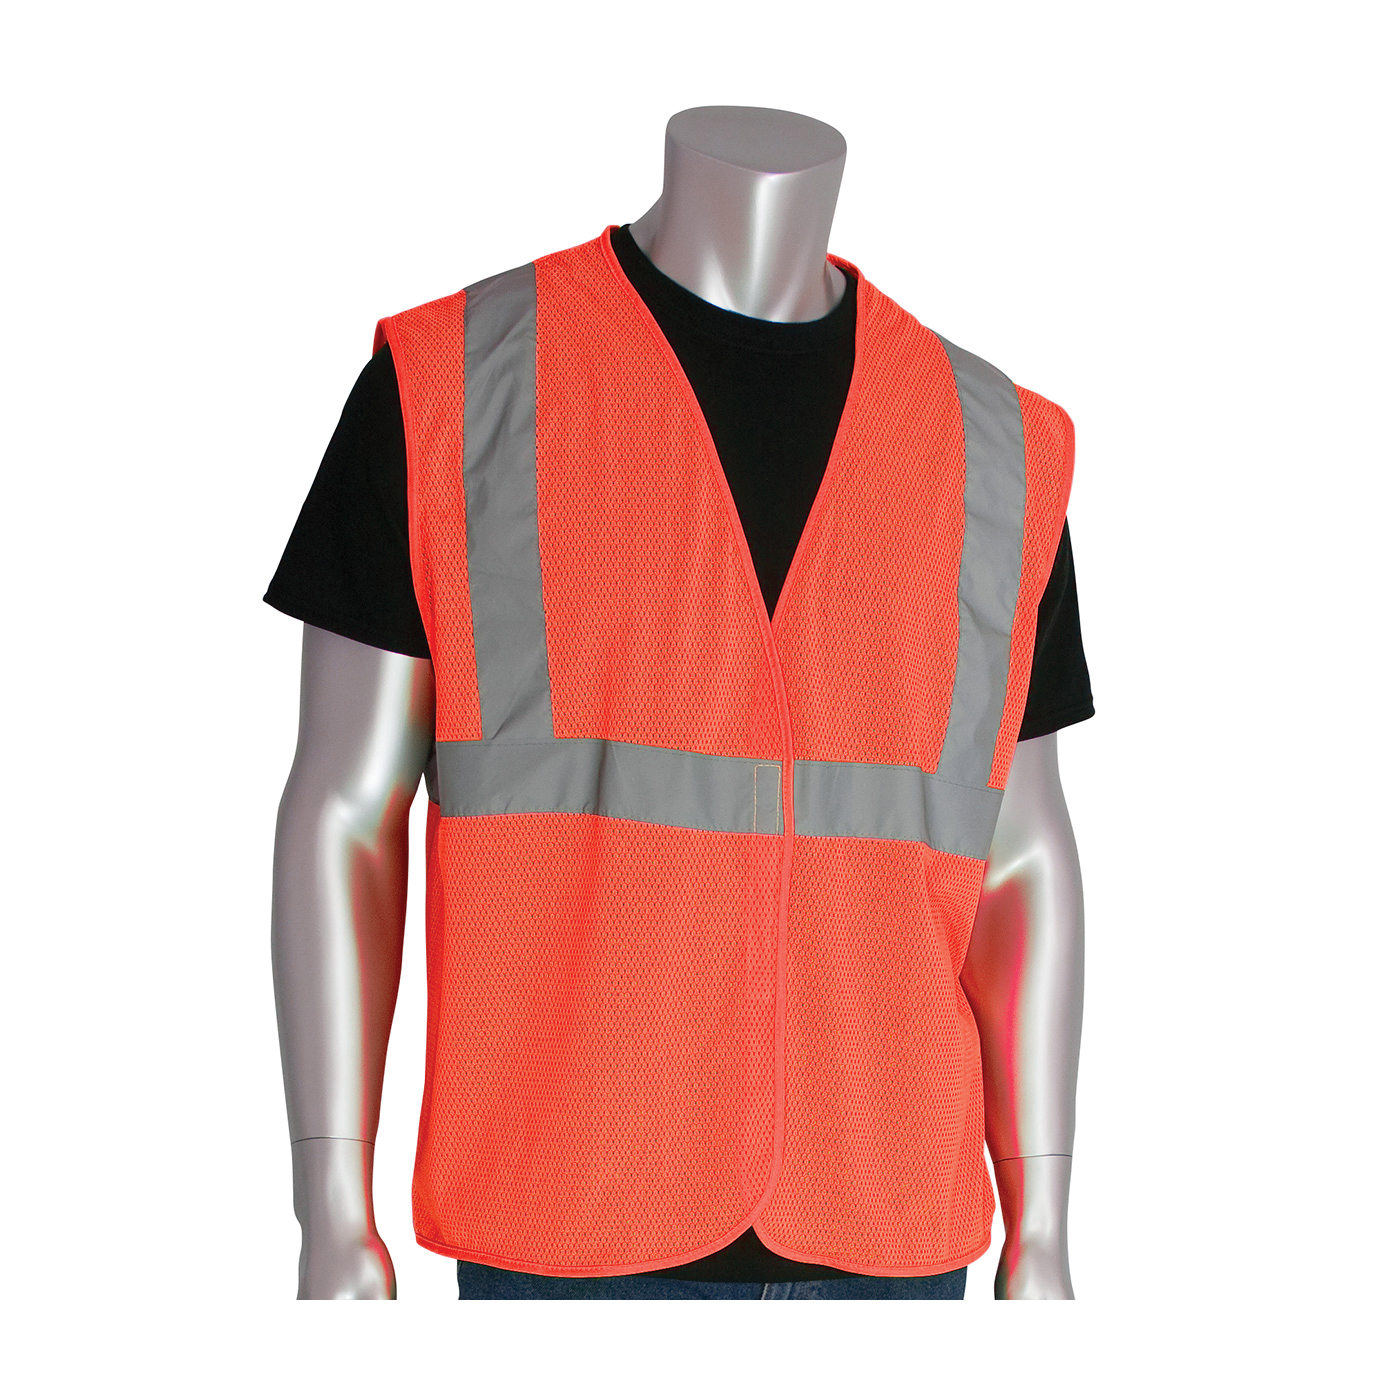 PIP® 302-MVGOR-XL Safety Vest, XL, Hi-Viz Orange, Polyester Mesh, Hook and Loop Closure, ANSI Class: Class 2, Specifications Met: ANSI 107 Type R